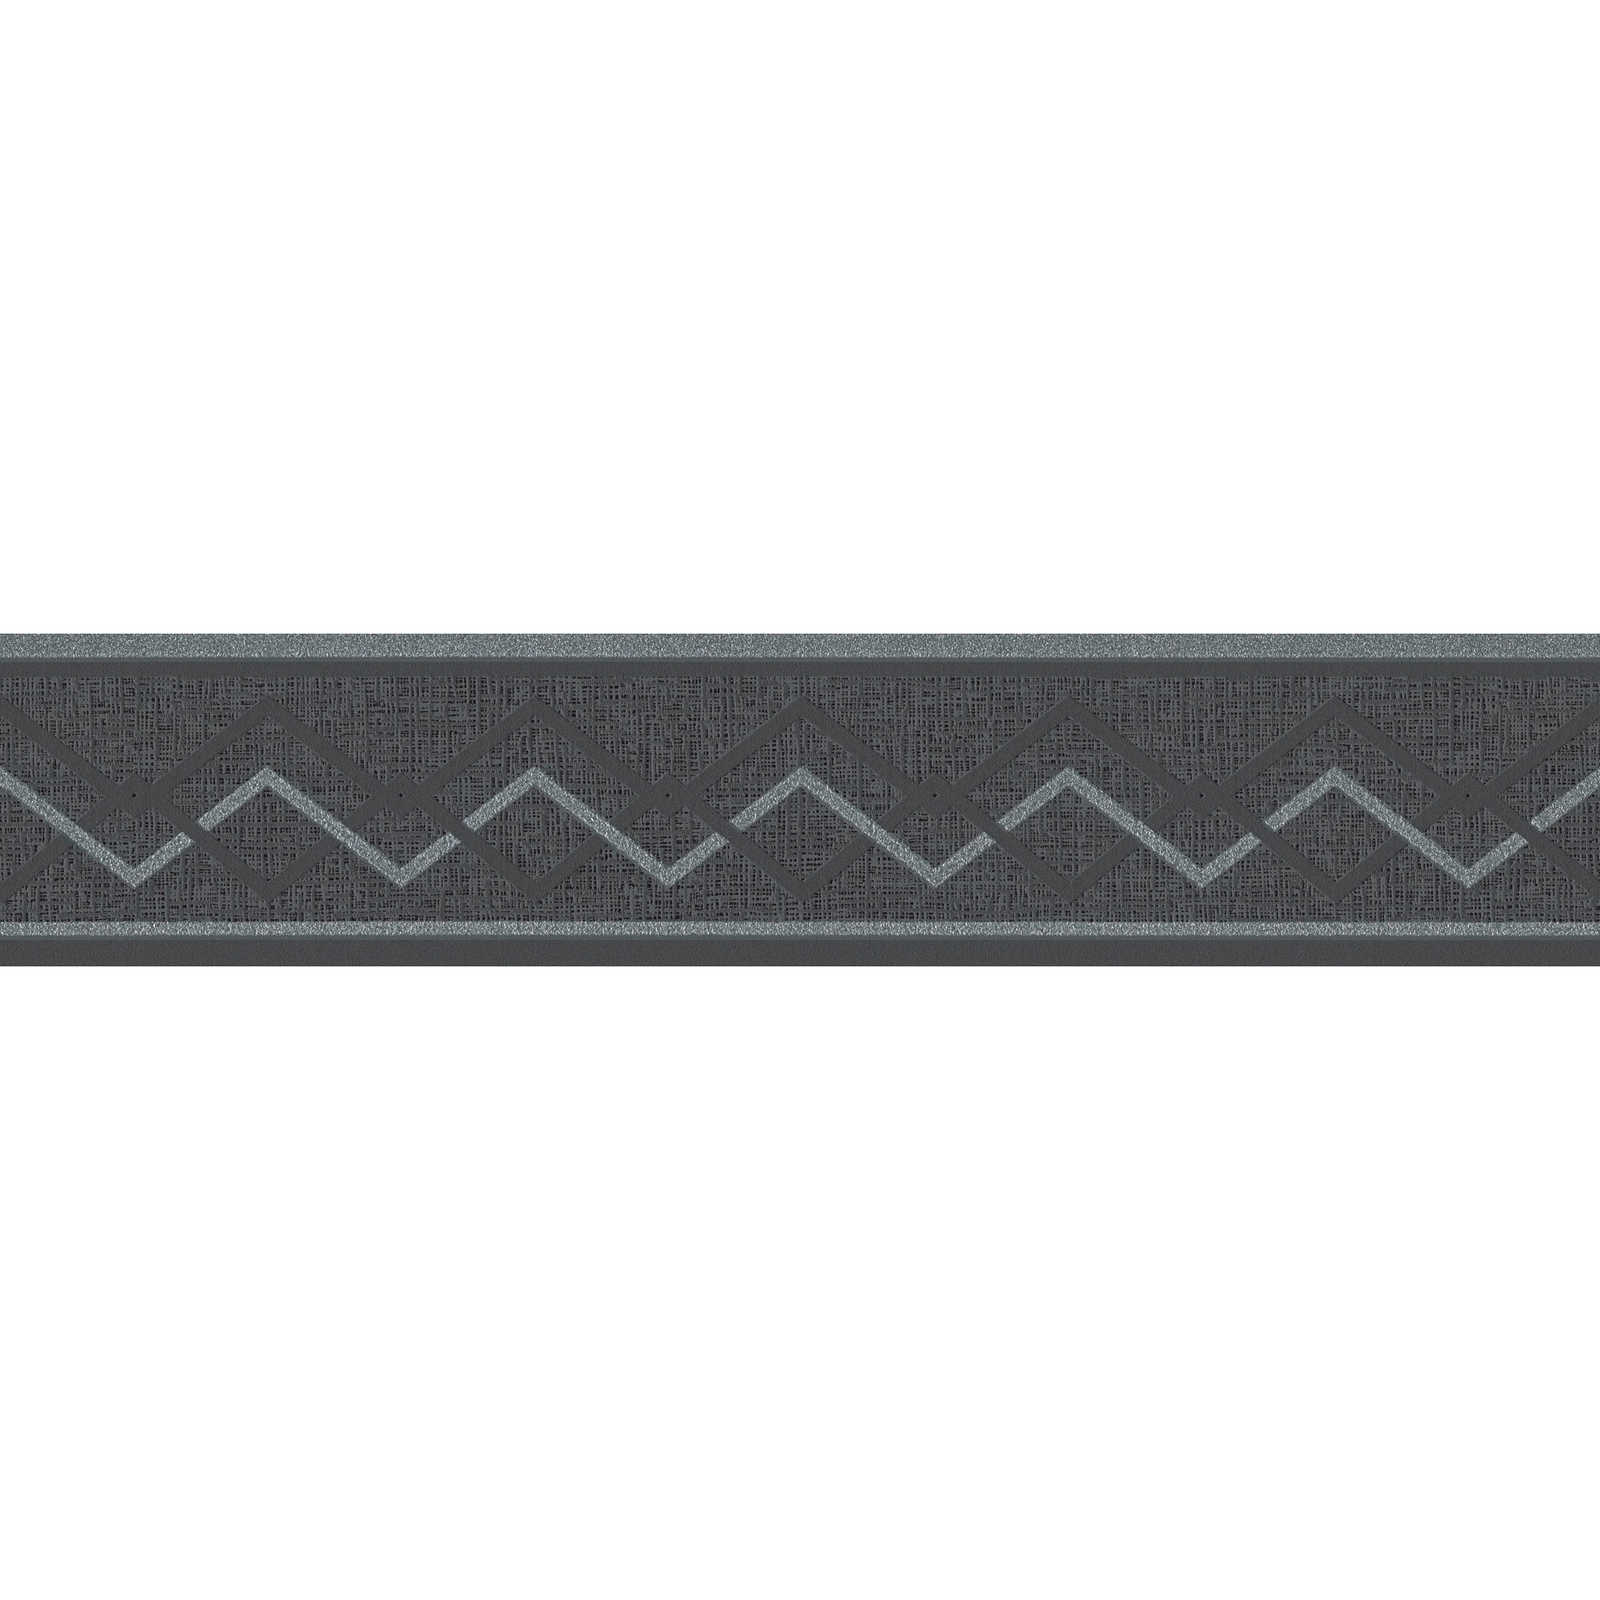         Grau-Schwarze Bordüre mit Zick-Zack Design & Silber Glitzer
    